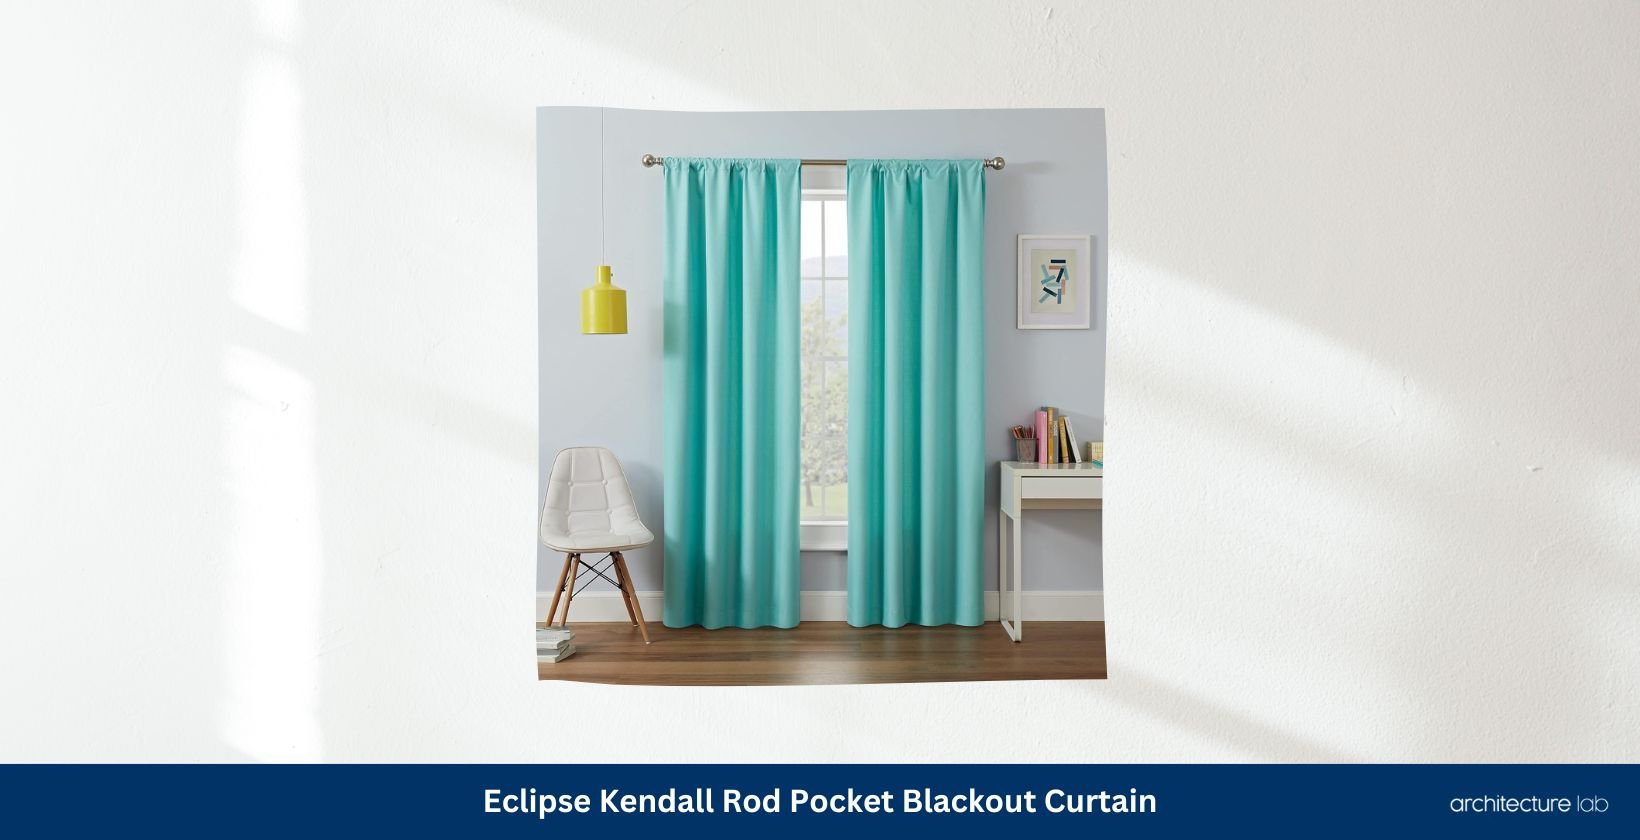 Eclipse kendall rod pocket blackout curtain